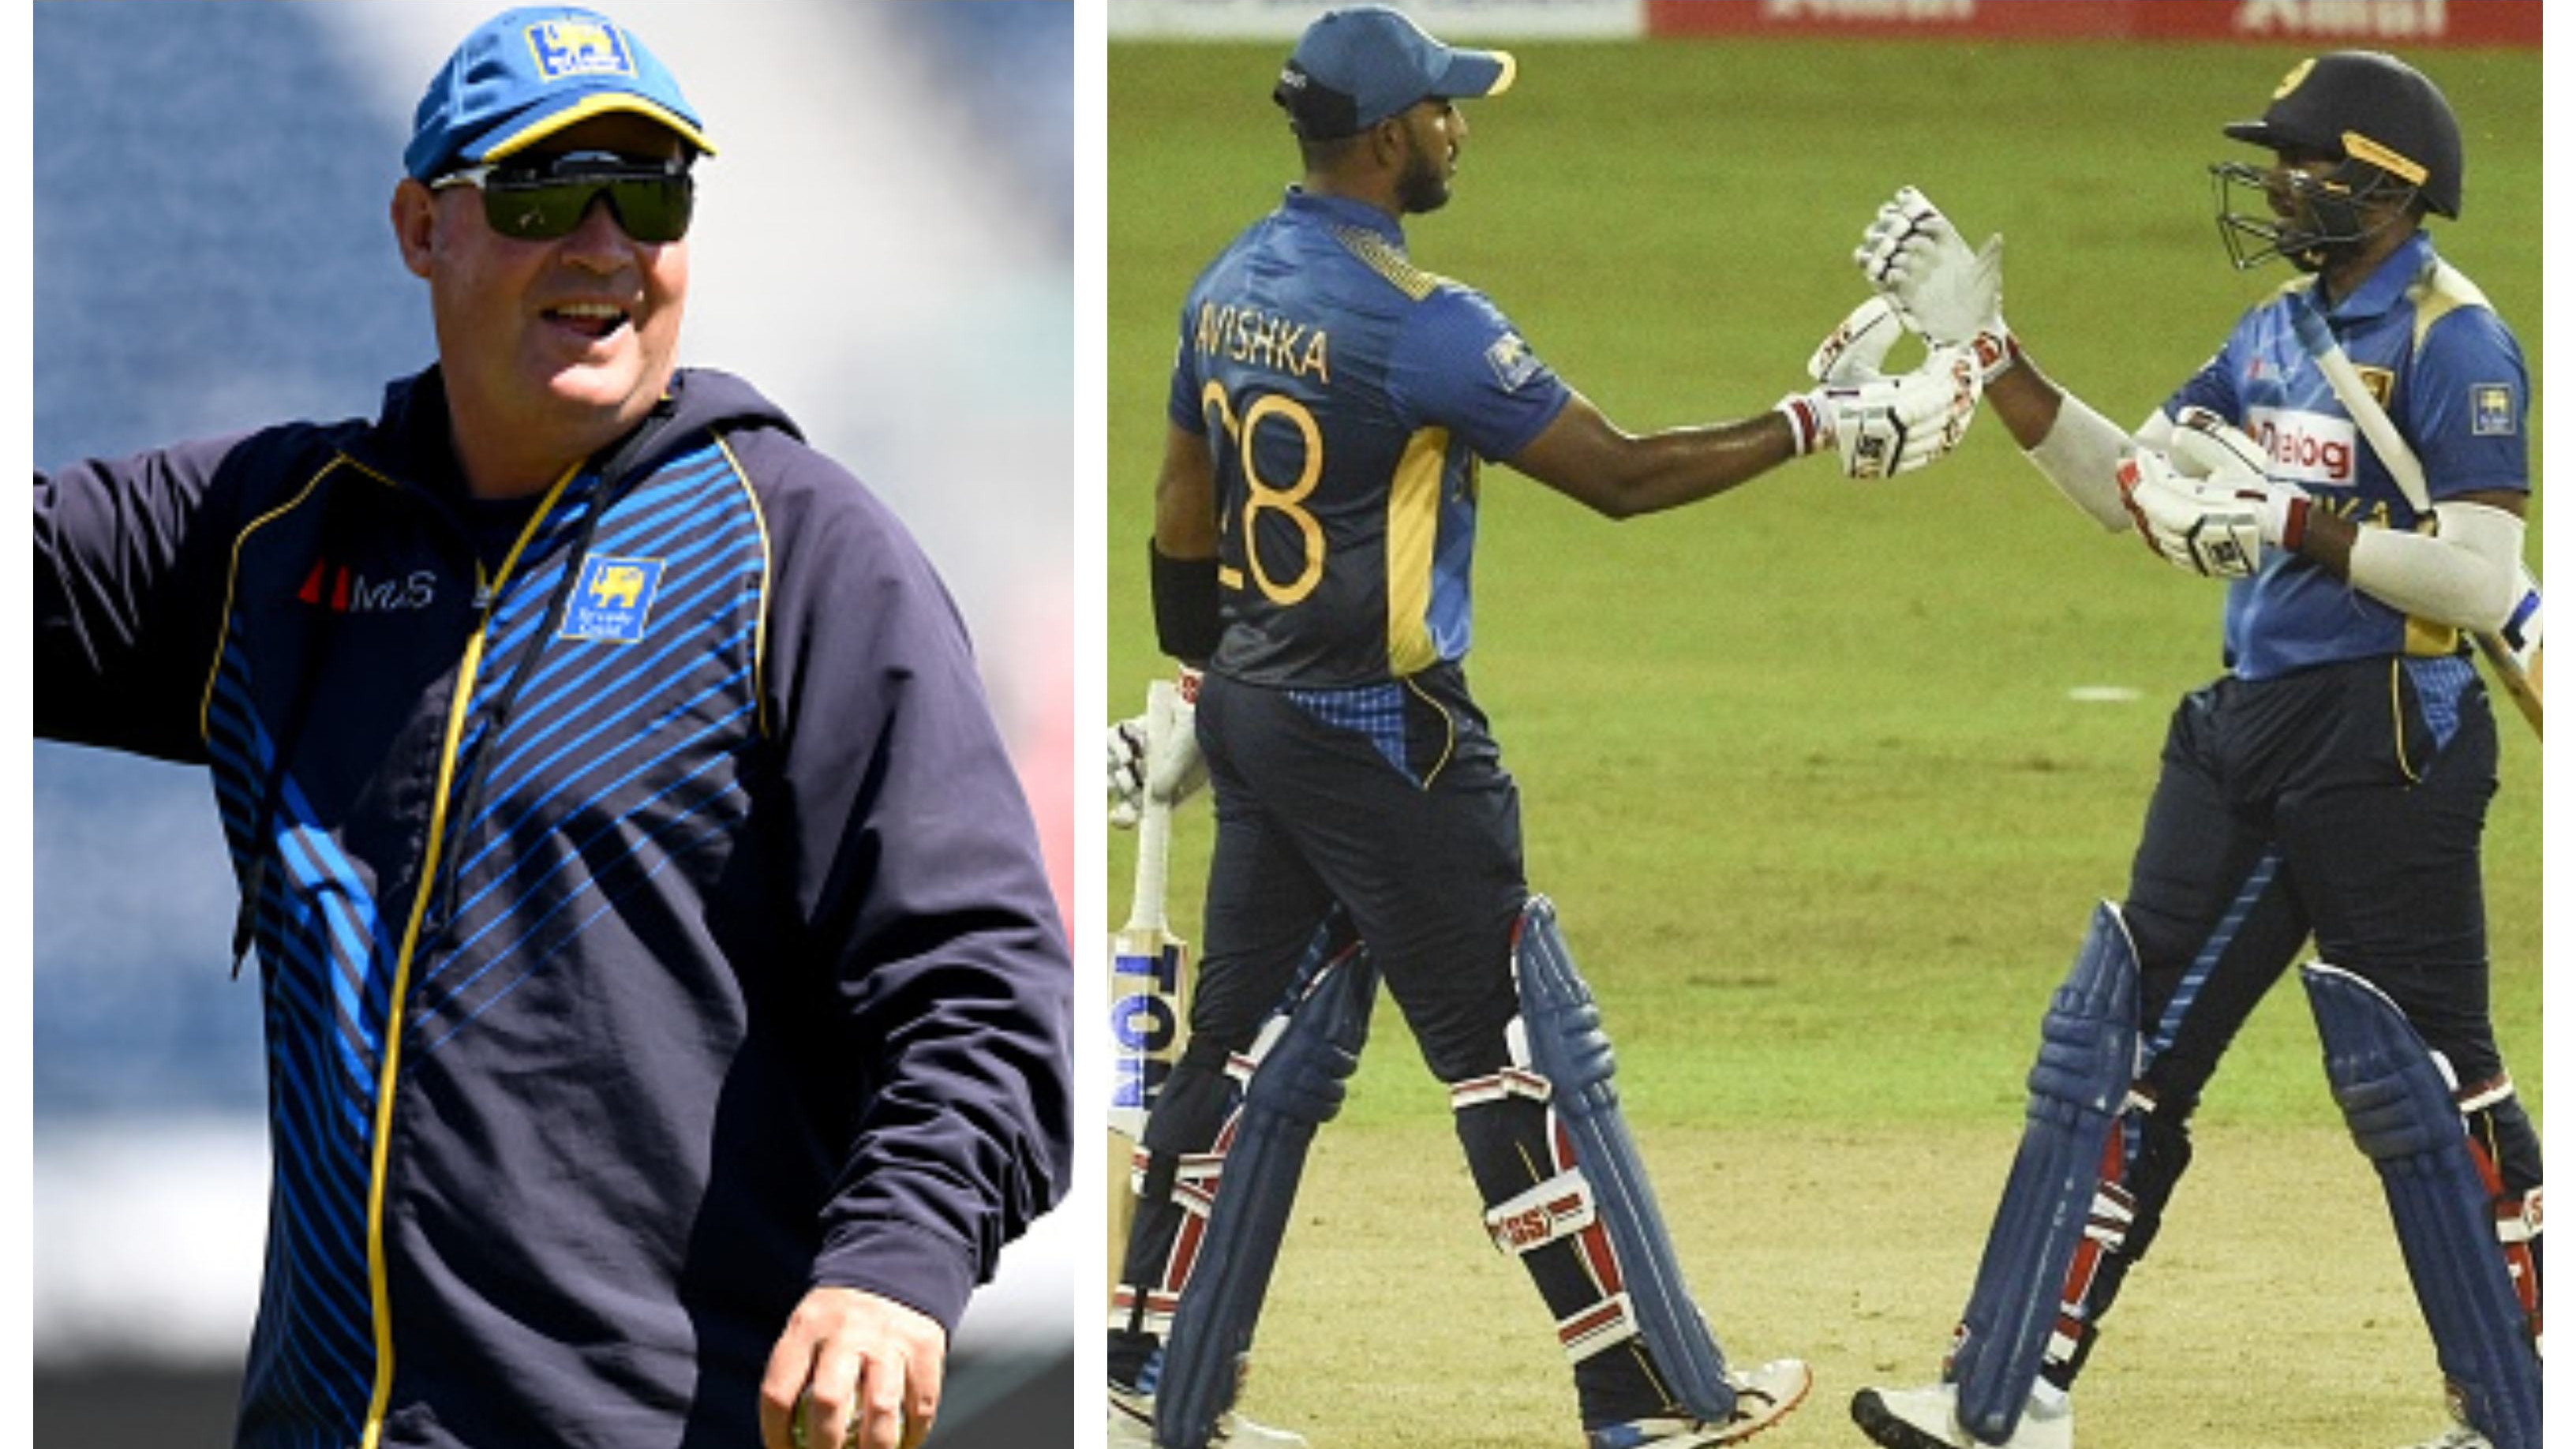 SL v IND 2021: Sri Lanka needs some depth in batting, says coach Mickey Arthur on the eve of 1st T20I